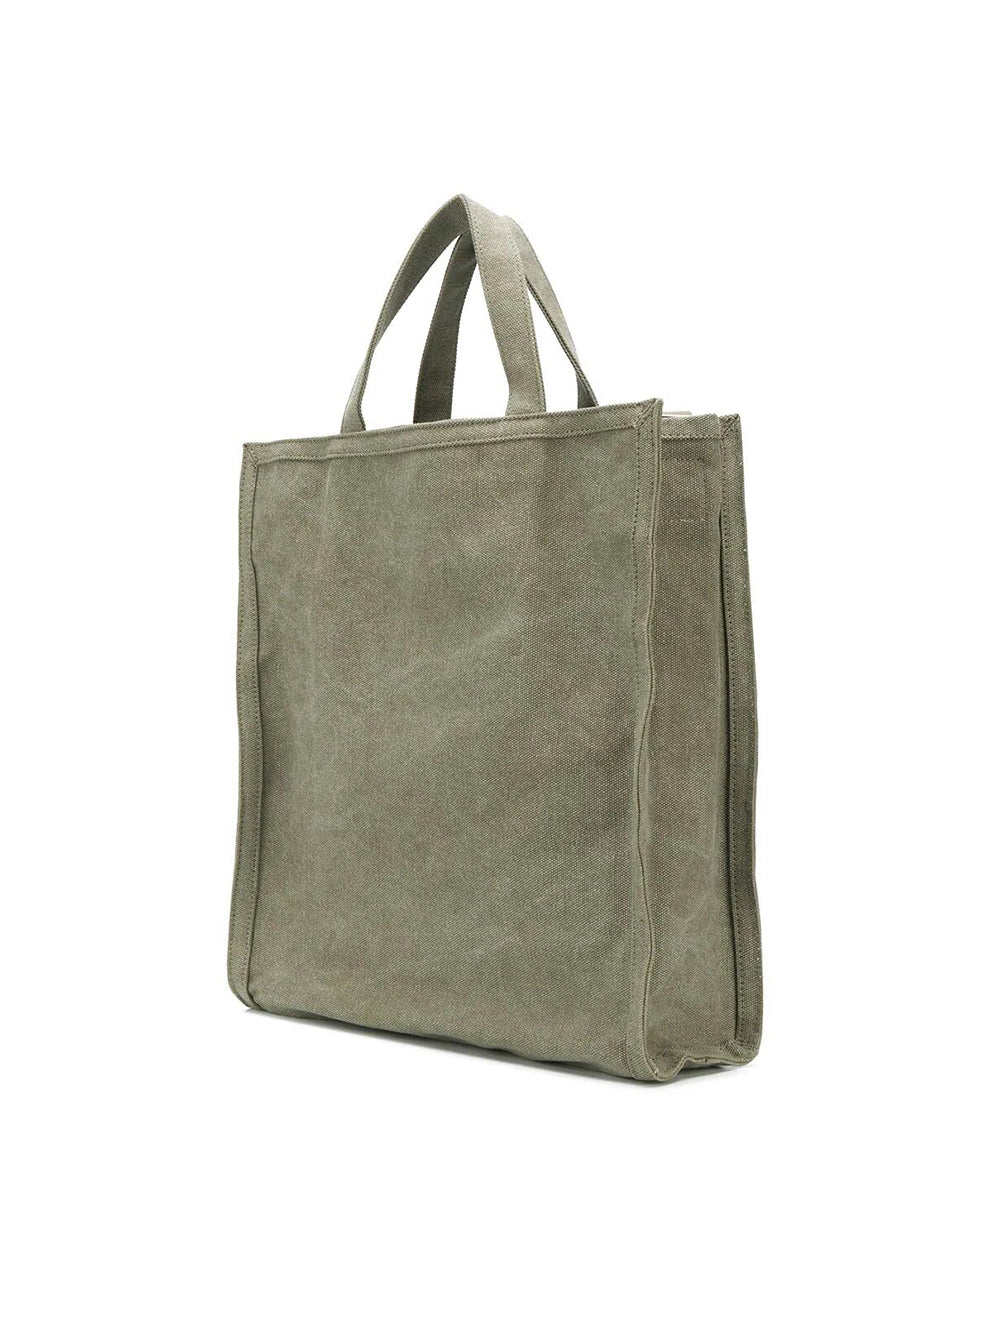 Khaki Recuperation Tote Bag